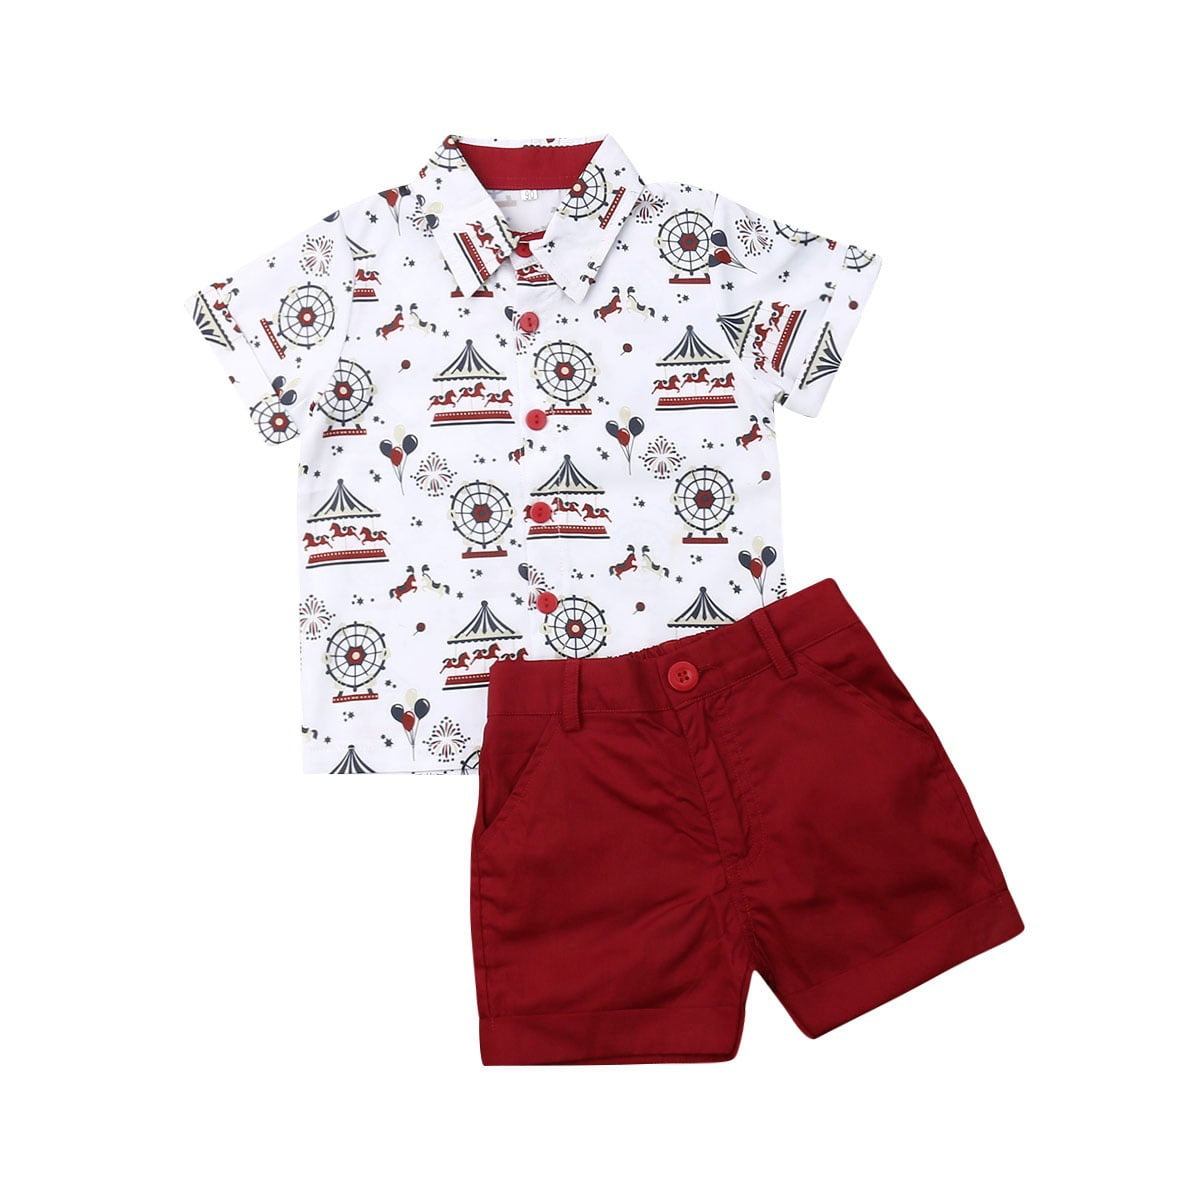 Toddler Kid Baby Boys Cartoon Printing T-shirt+Short Pants Clothes Outfits Set X